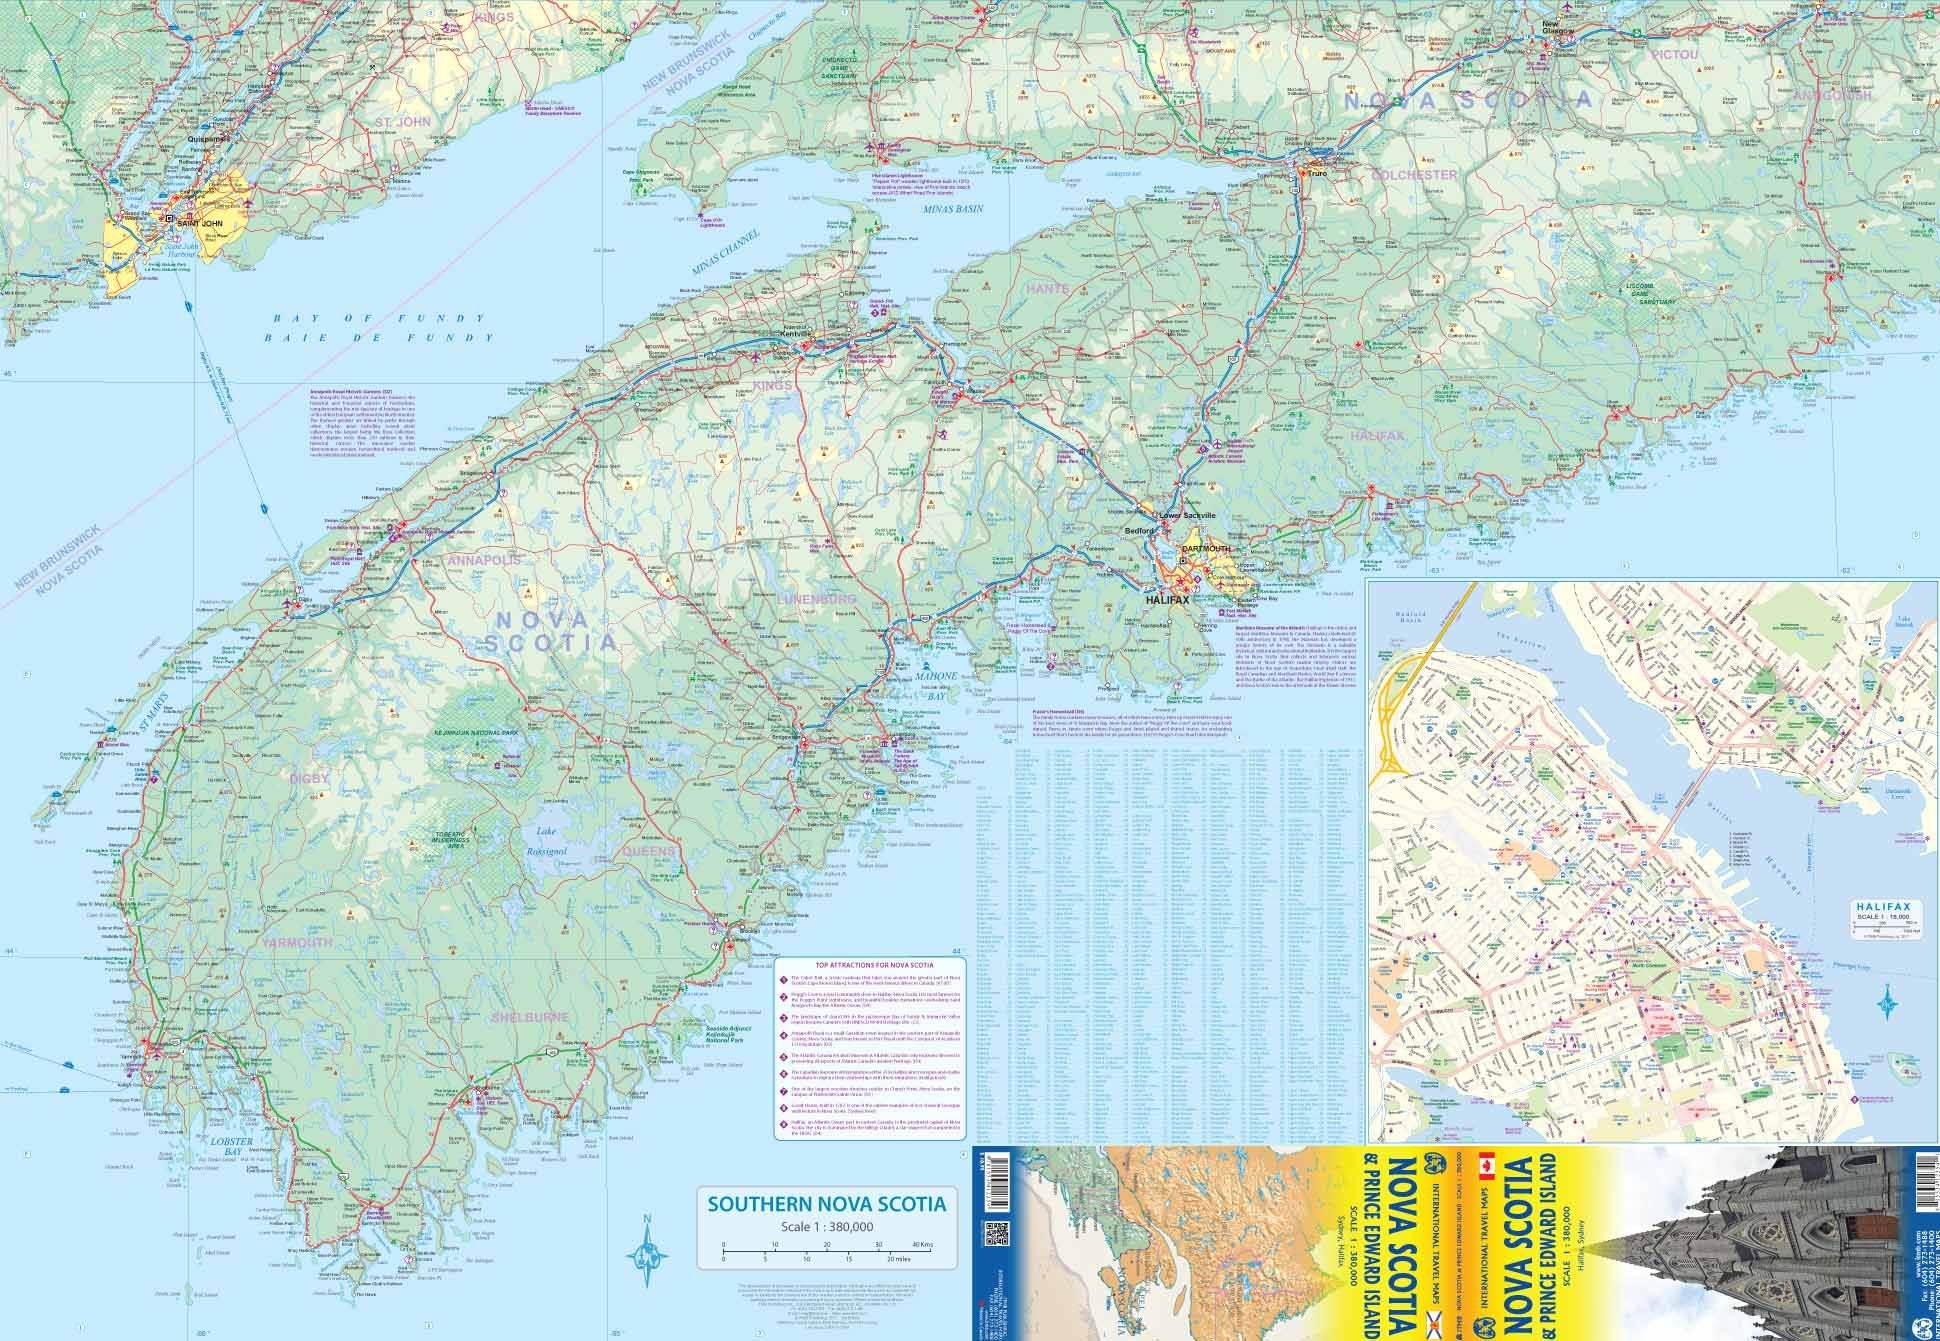 Nova Scotia & PEI  ITM Travel Map 4e